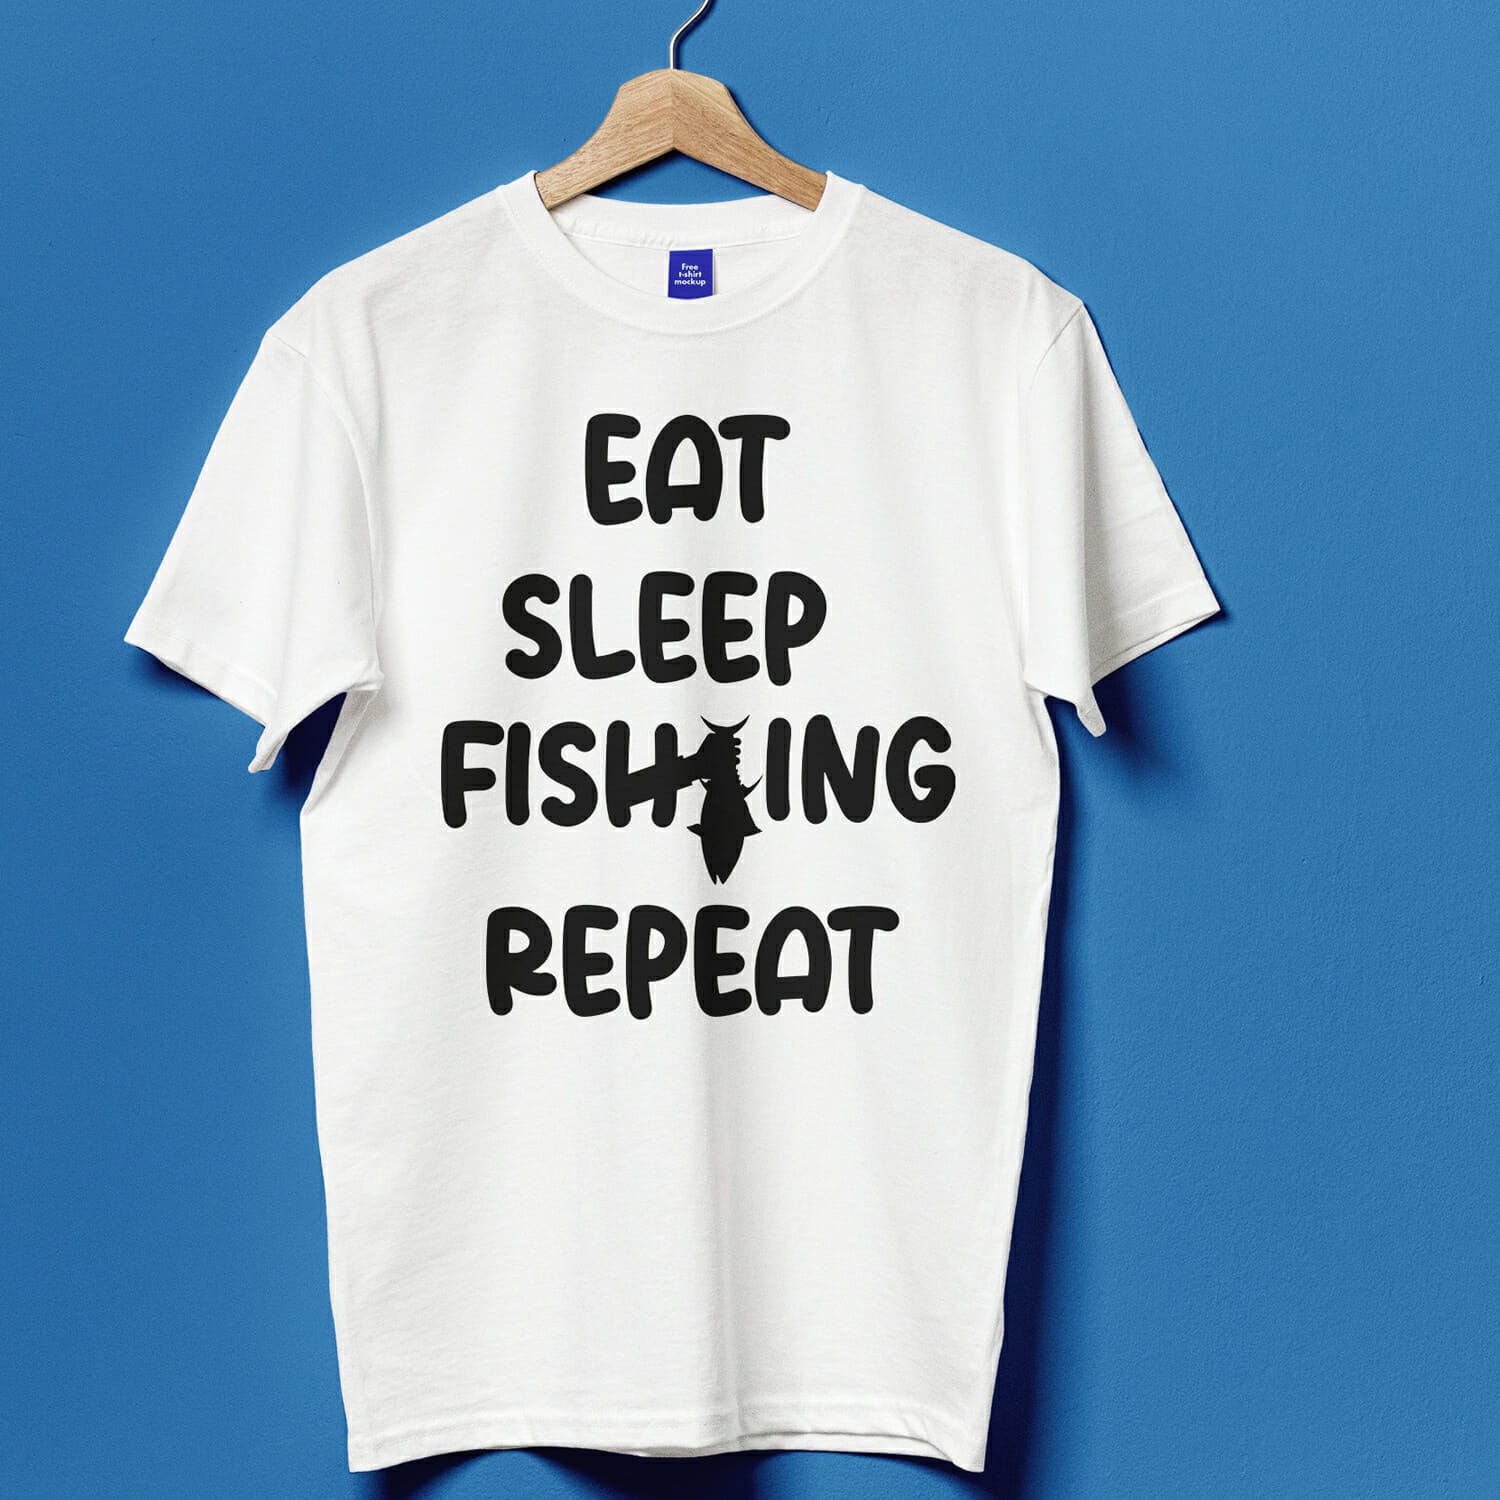 Eat Sleep Fishing Repeat T-shirt Design